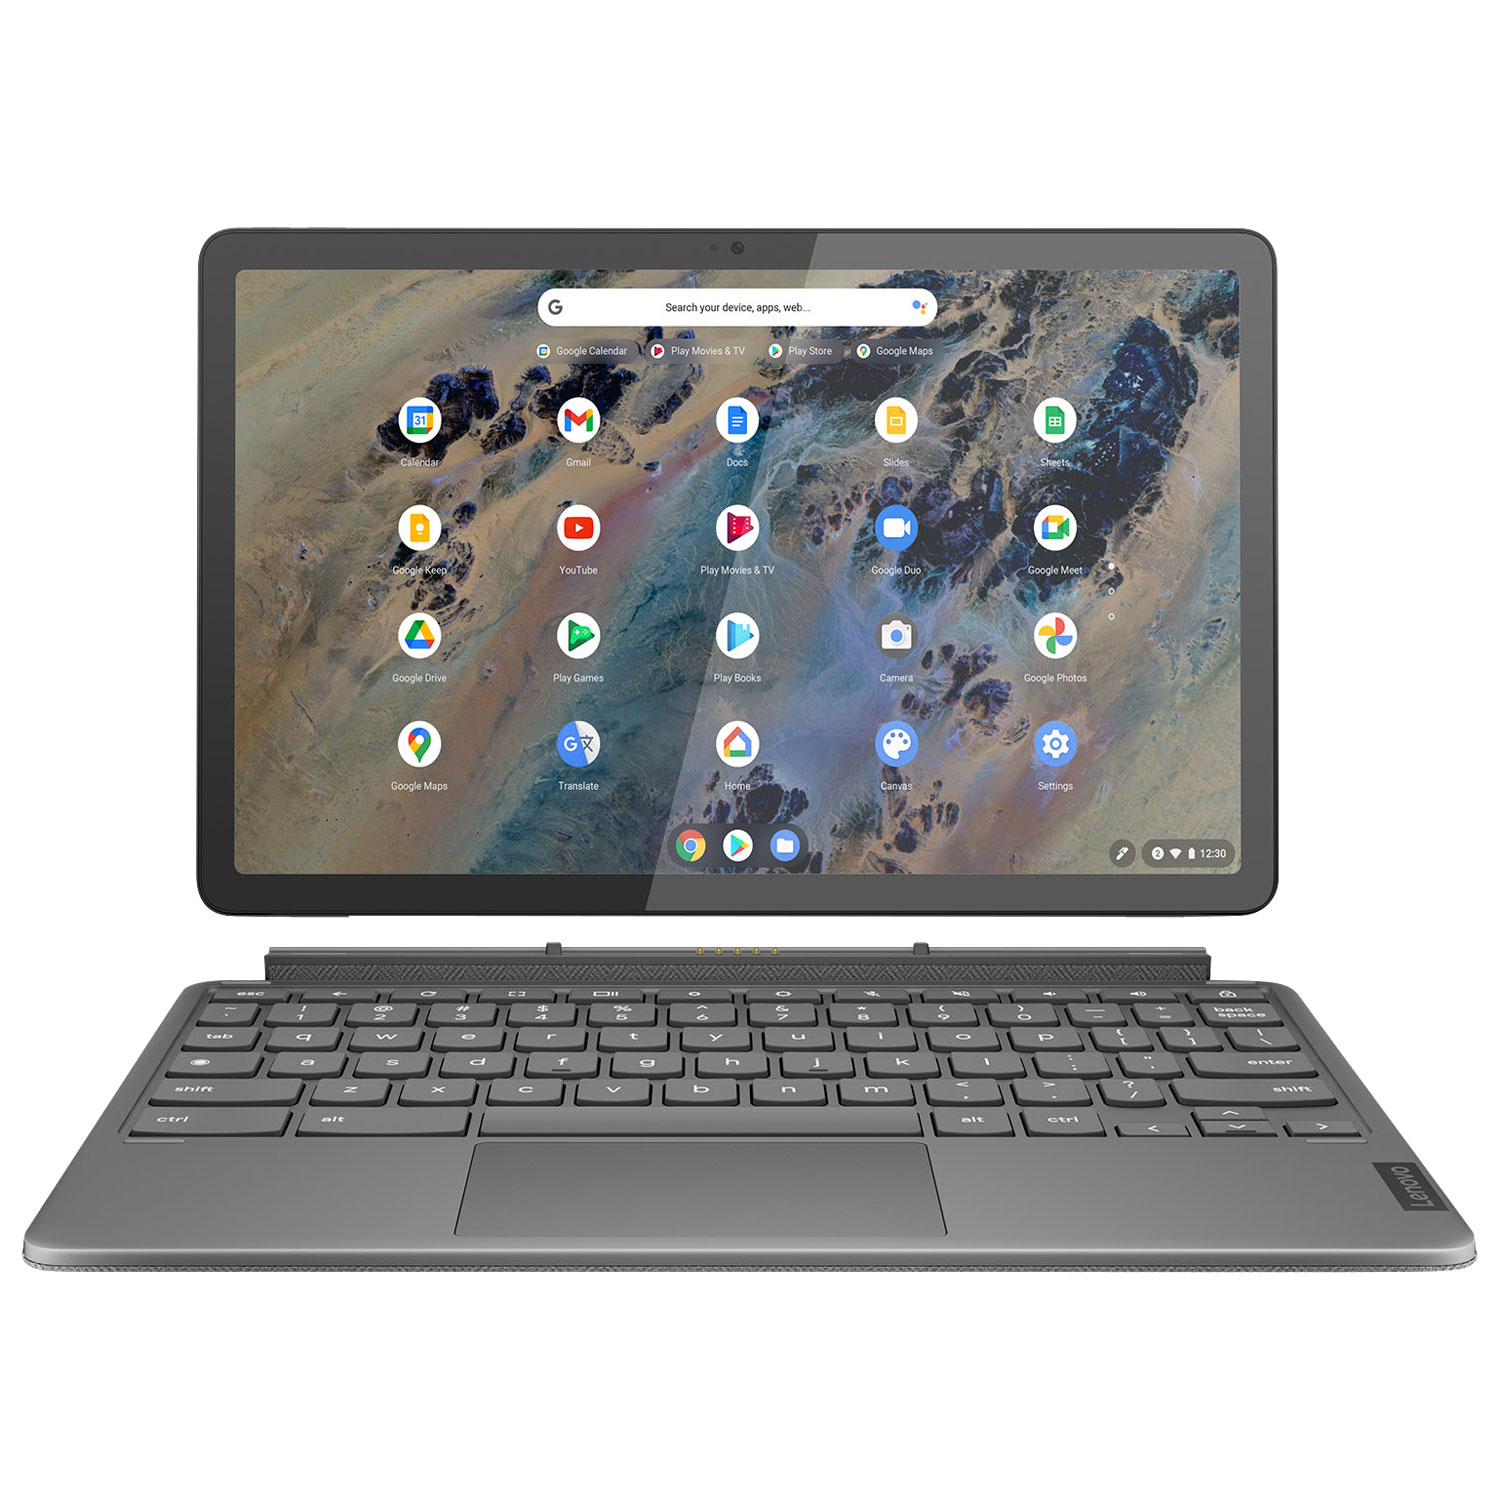 Lenovo IdeaPad Duet 3 128GB Chrome OS Tablet w/ Media Tek G80 8-Core Processor - Storm Grey